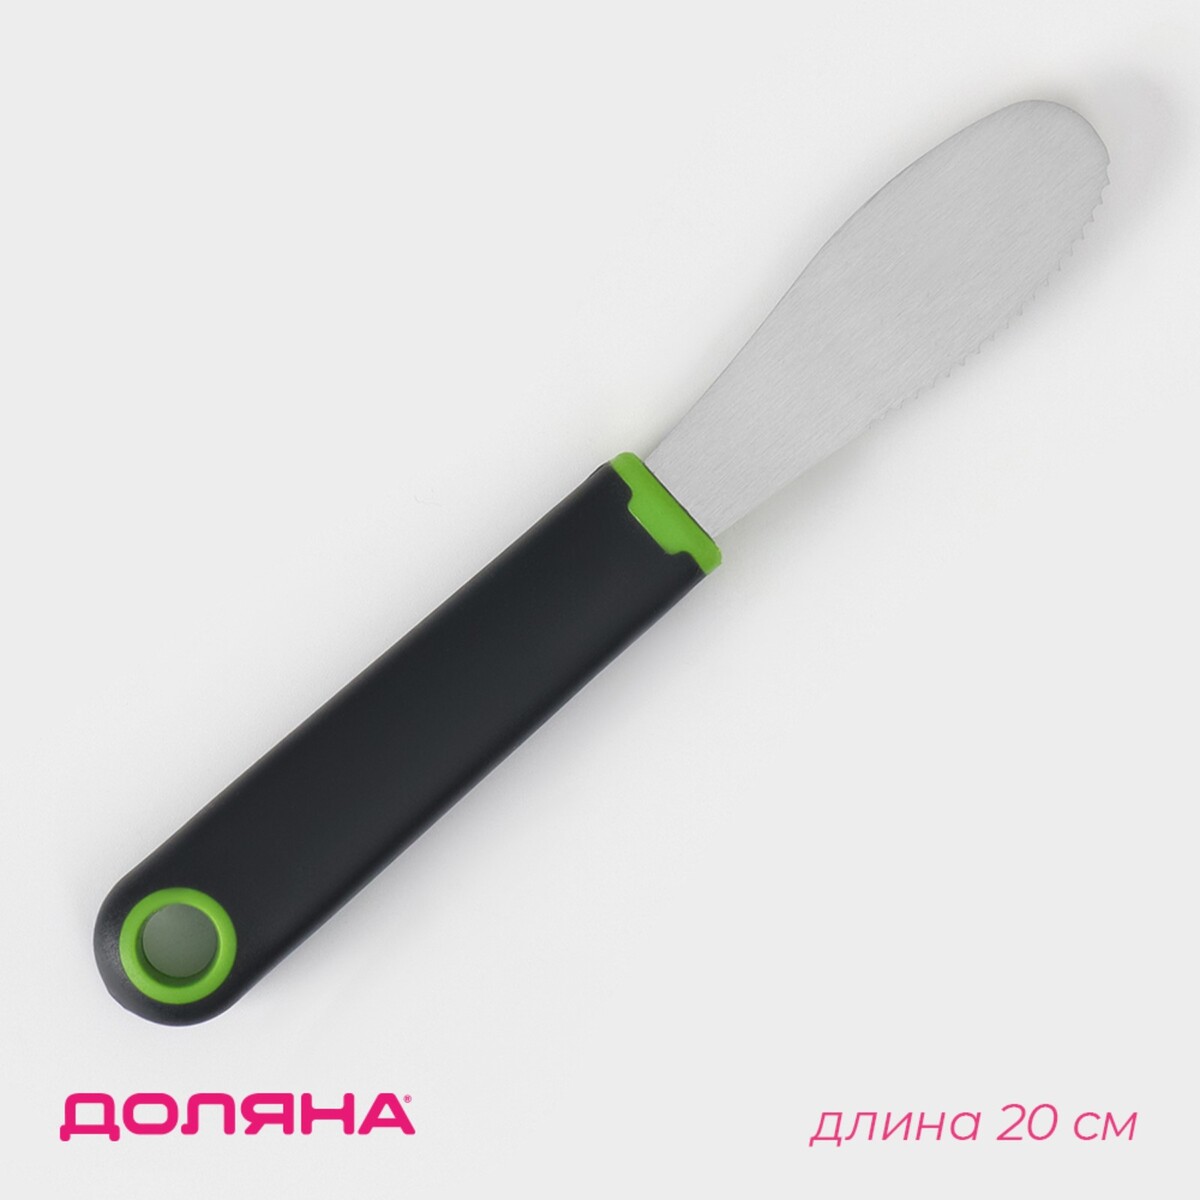 Нож для масла доляна lime, 20×3 см, цвет черно-зеленый нож консервный доляна lime 20×5 см черно зеленый